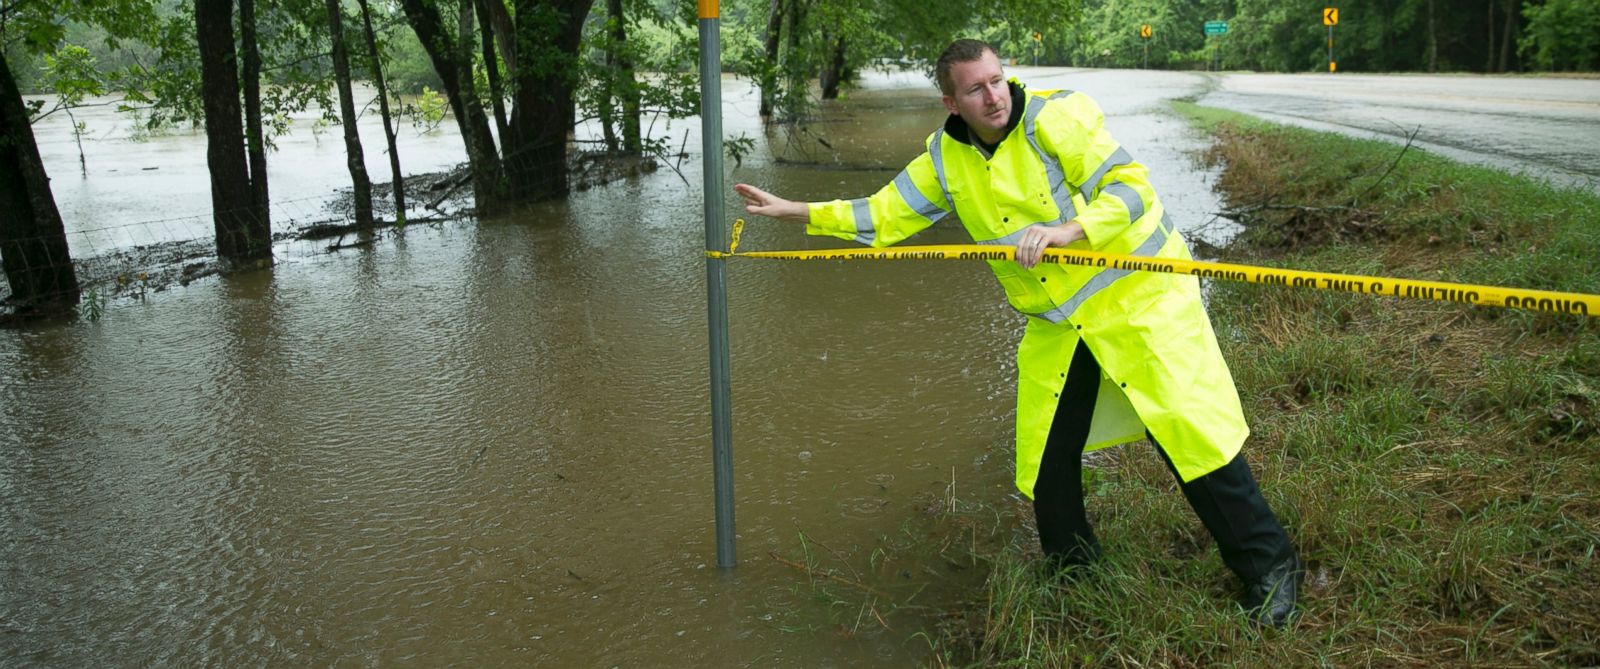 Mandatory Evacuation Issued for Rosenberg, Texas, As Floods Turn Deadly - ABC News